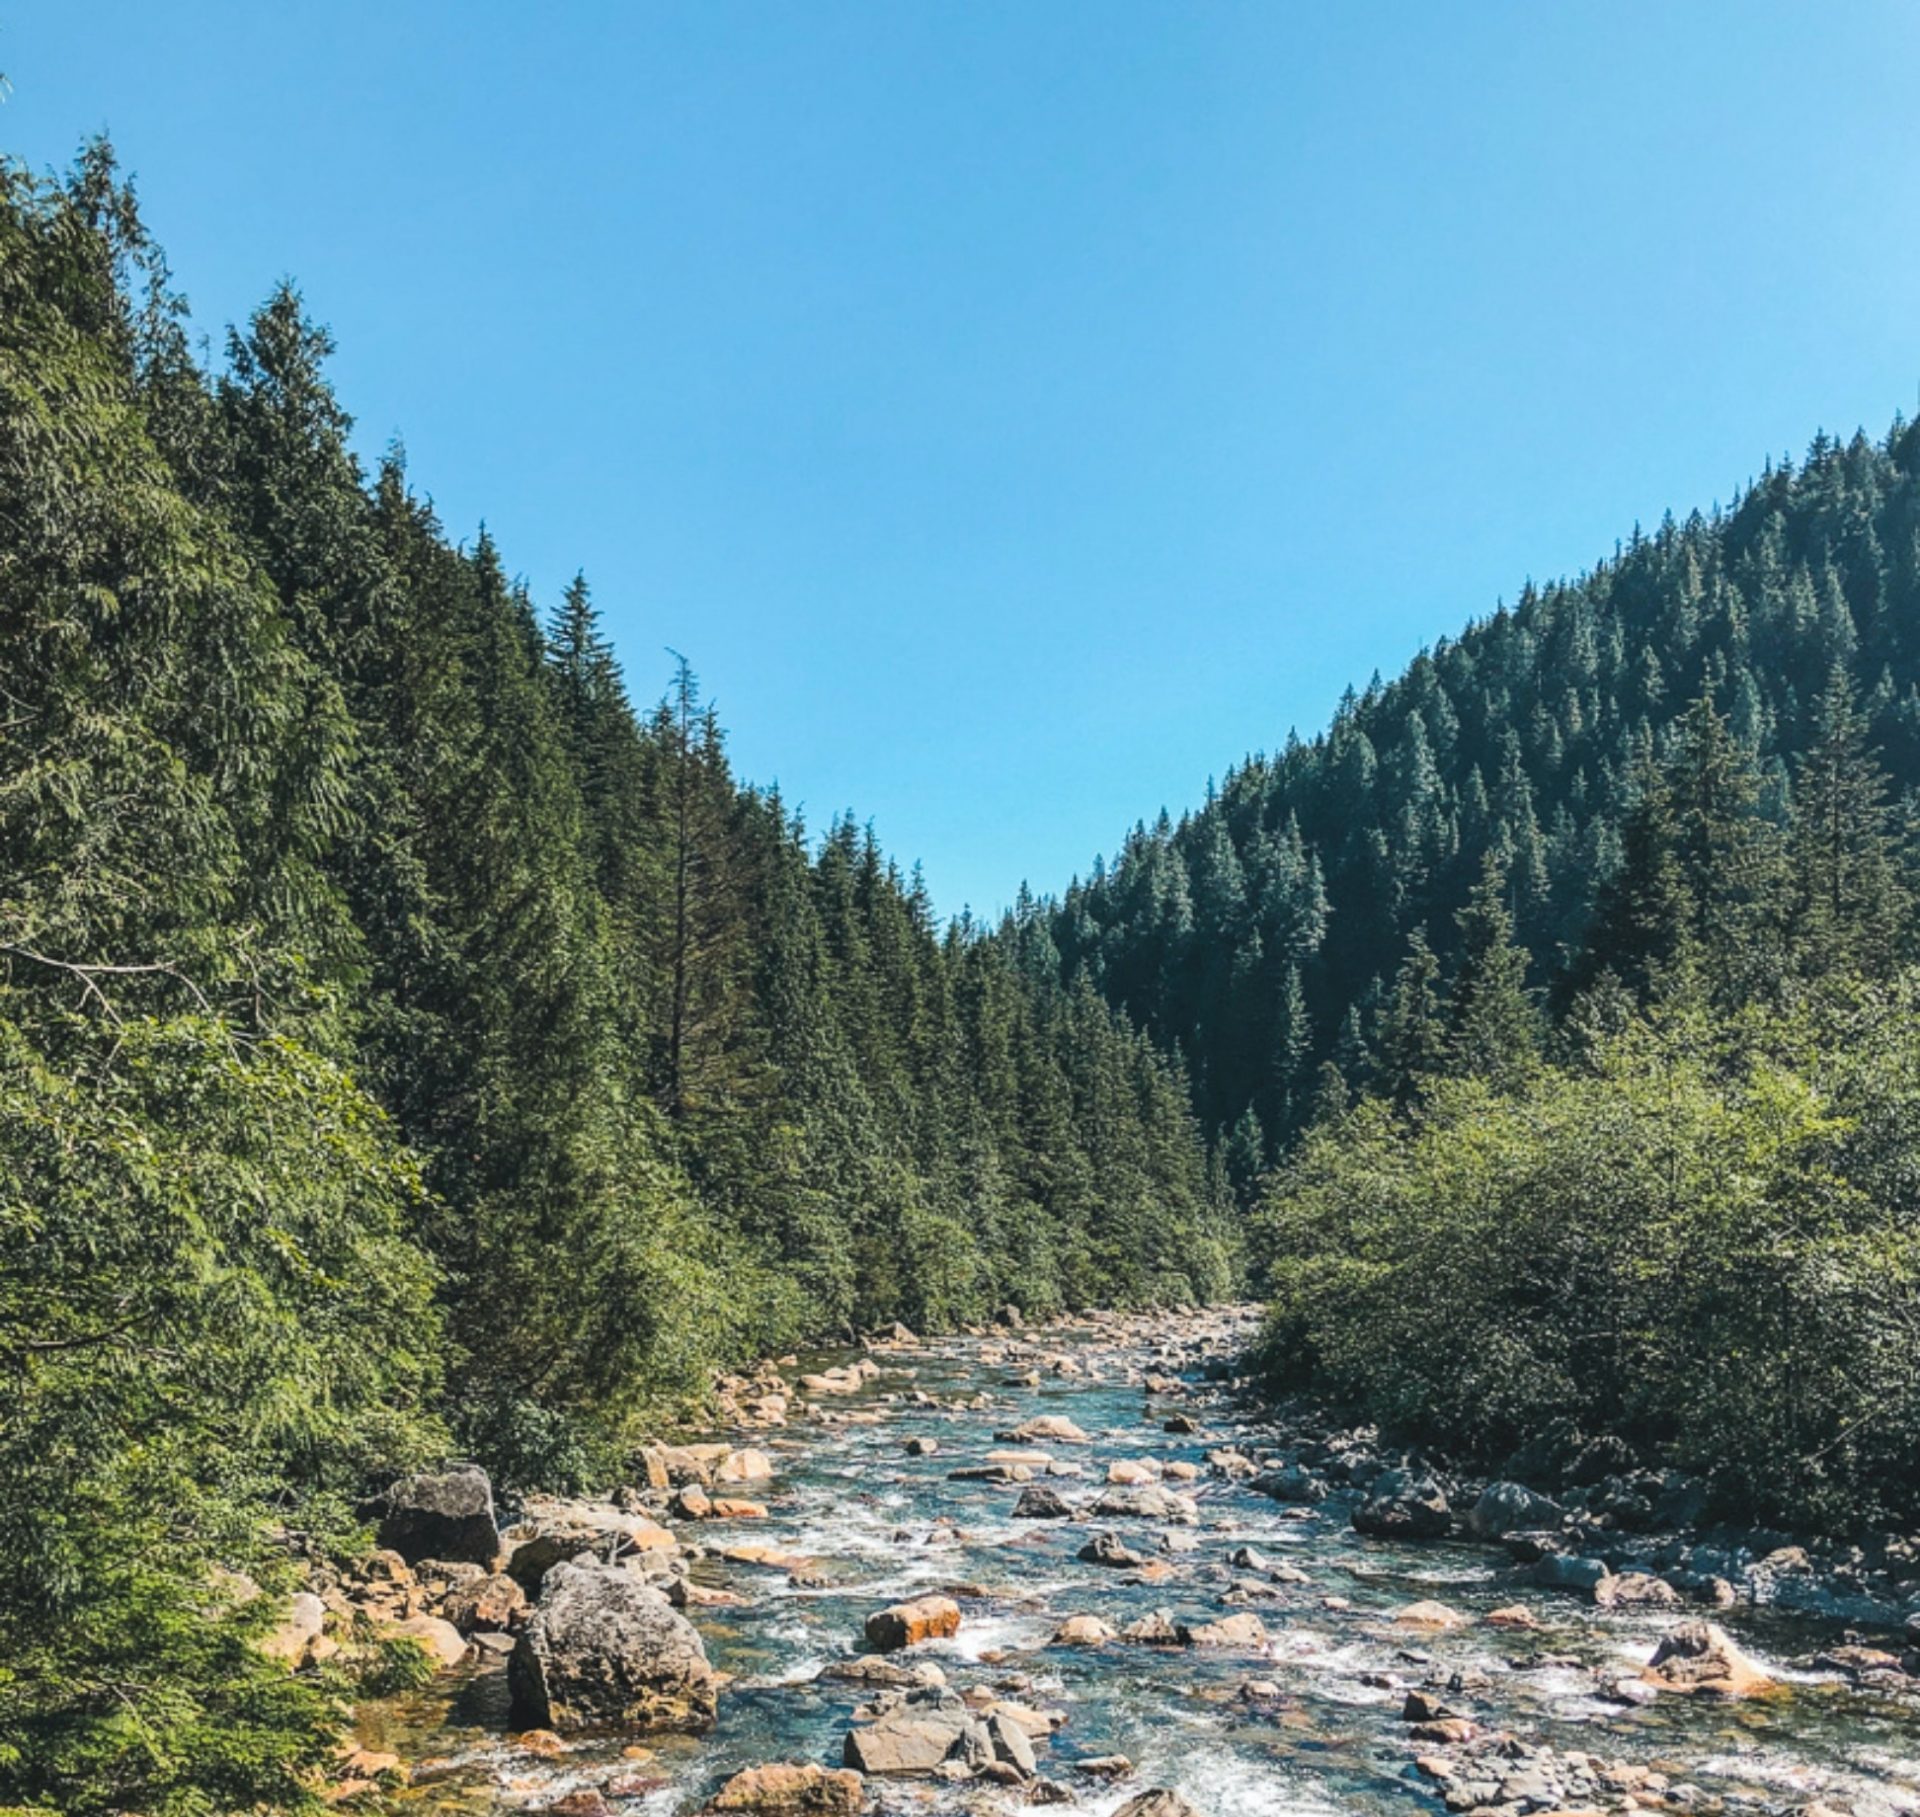 River in between green trees in Golden Ears Provincial Park in Maple Ridge